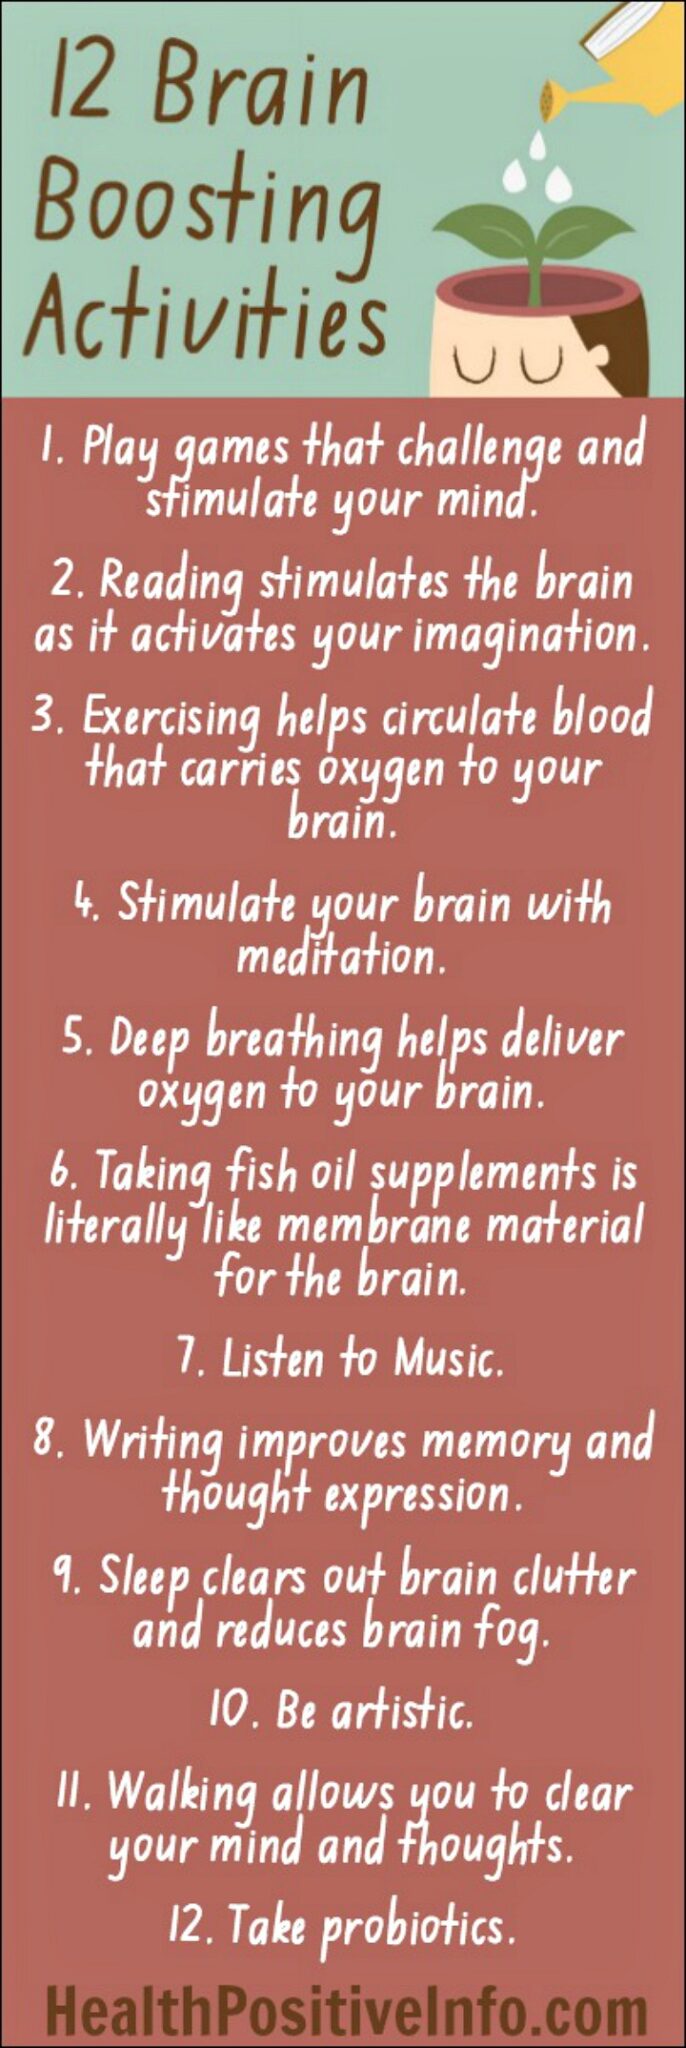 12 Brain Boosting Activities